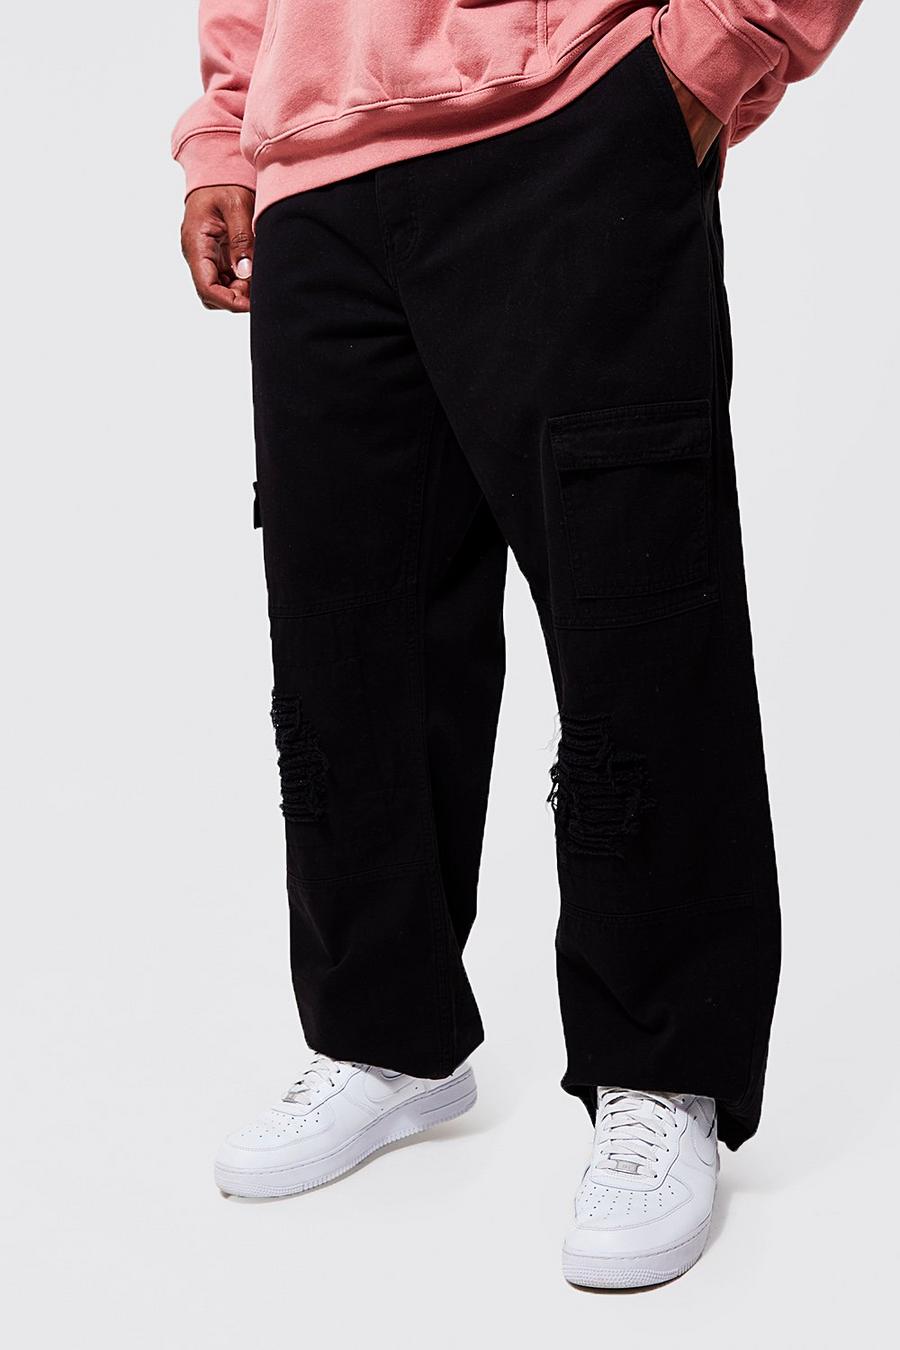 Black nero מכנסי דגמ"ח בגזרה ישרה עם קרעים, מידות גדולות image number 1